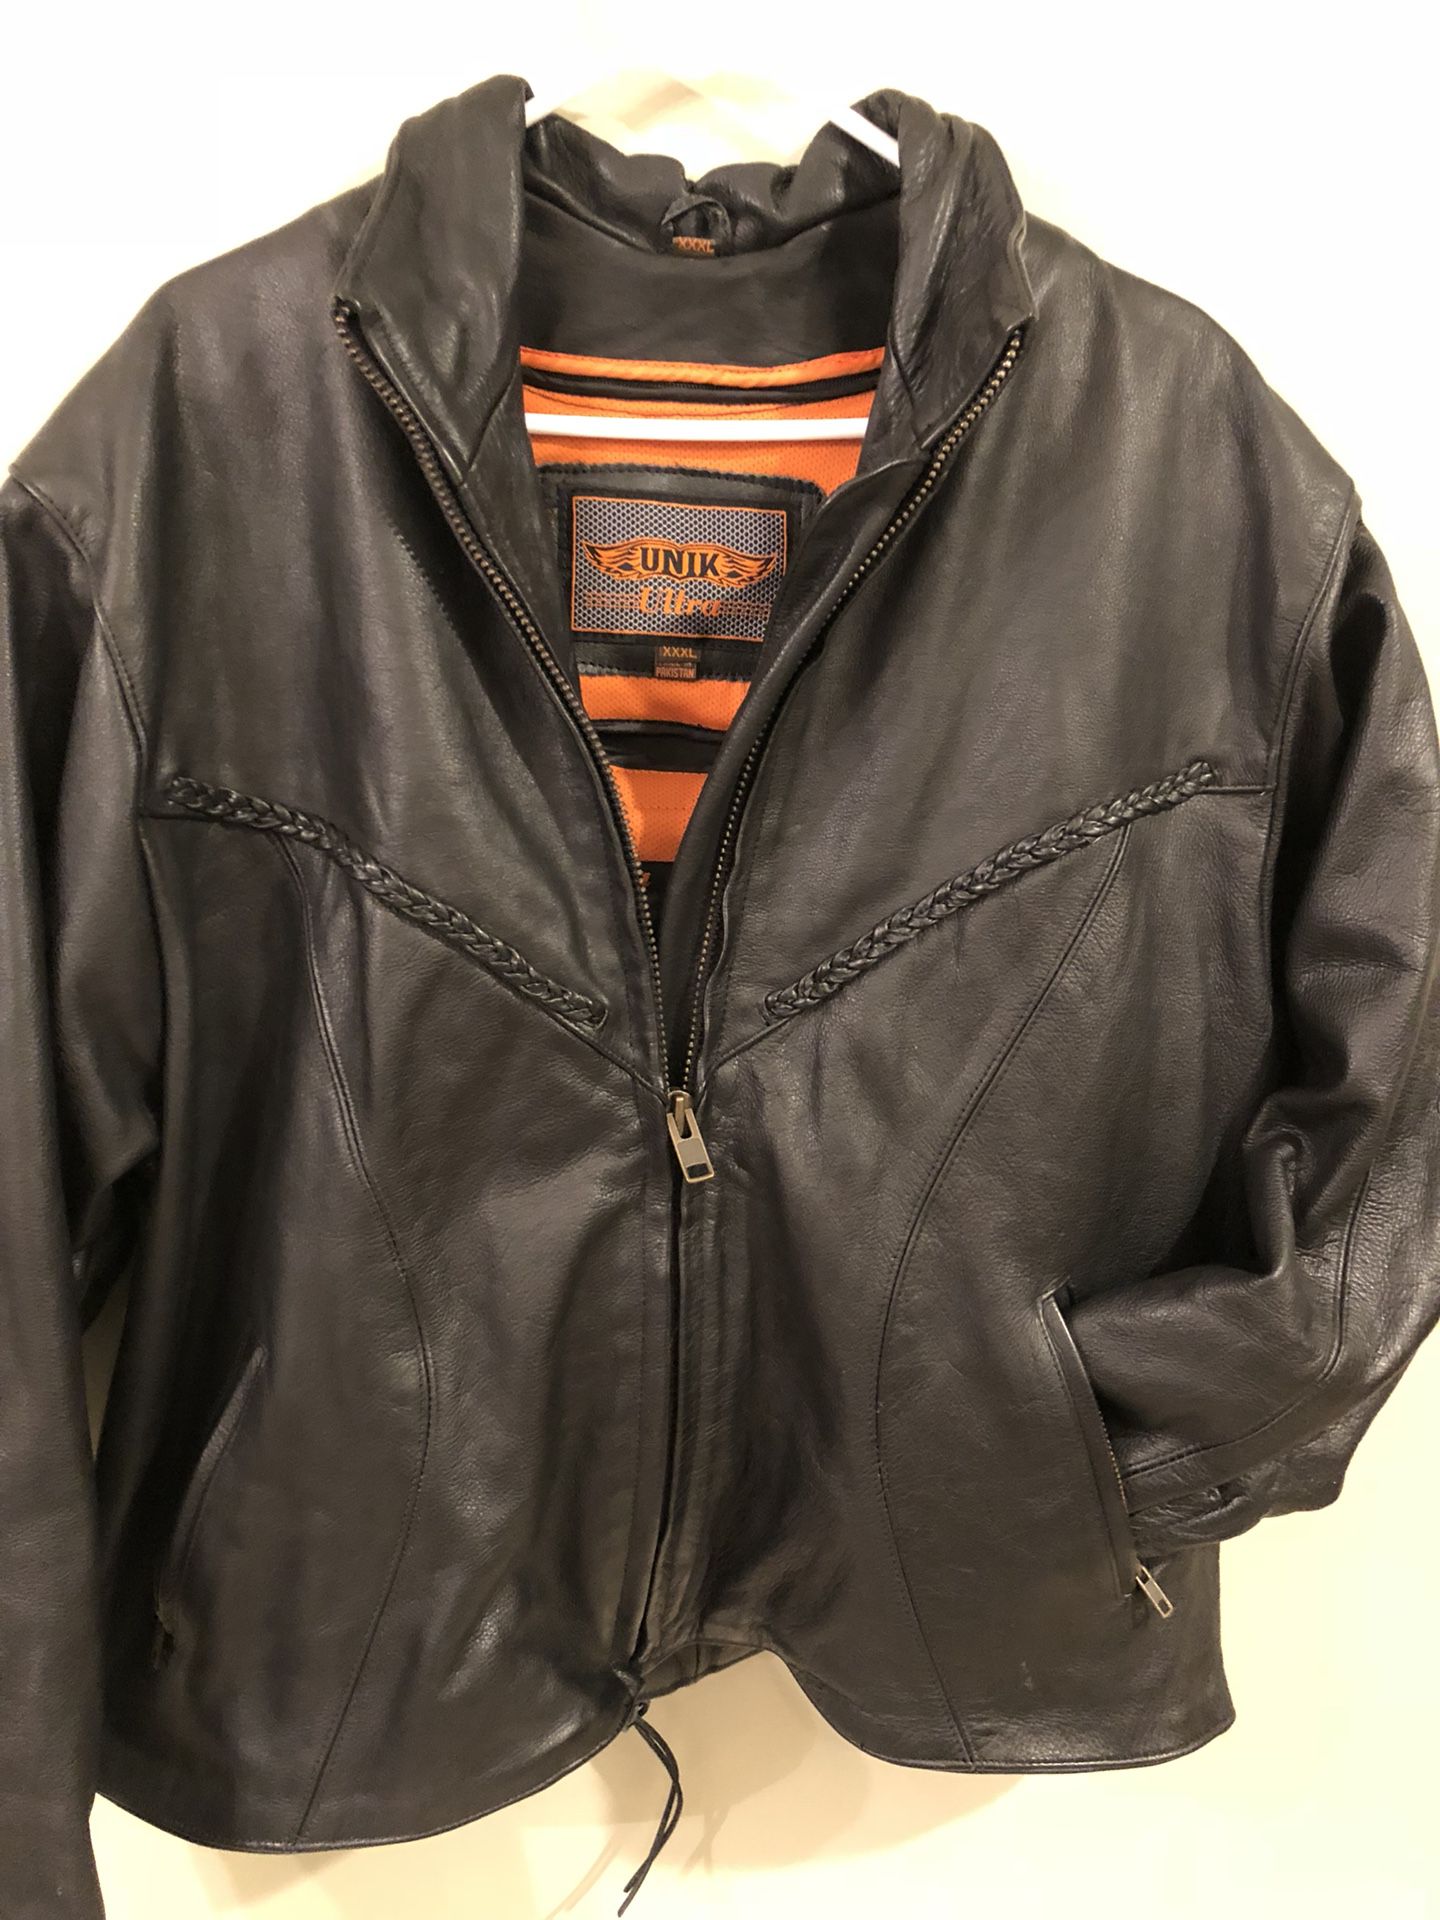 Women’s leather Jacket  Very Nice